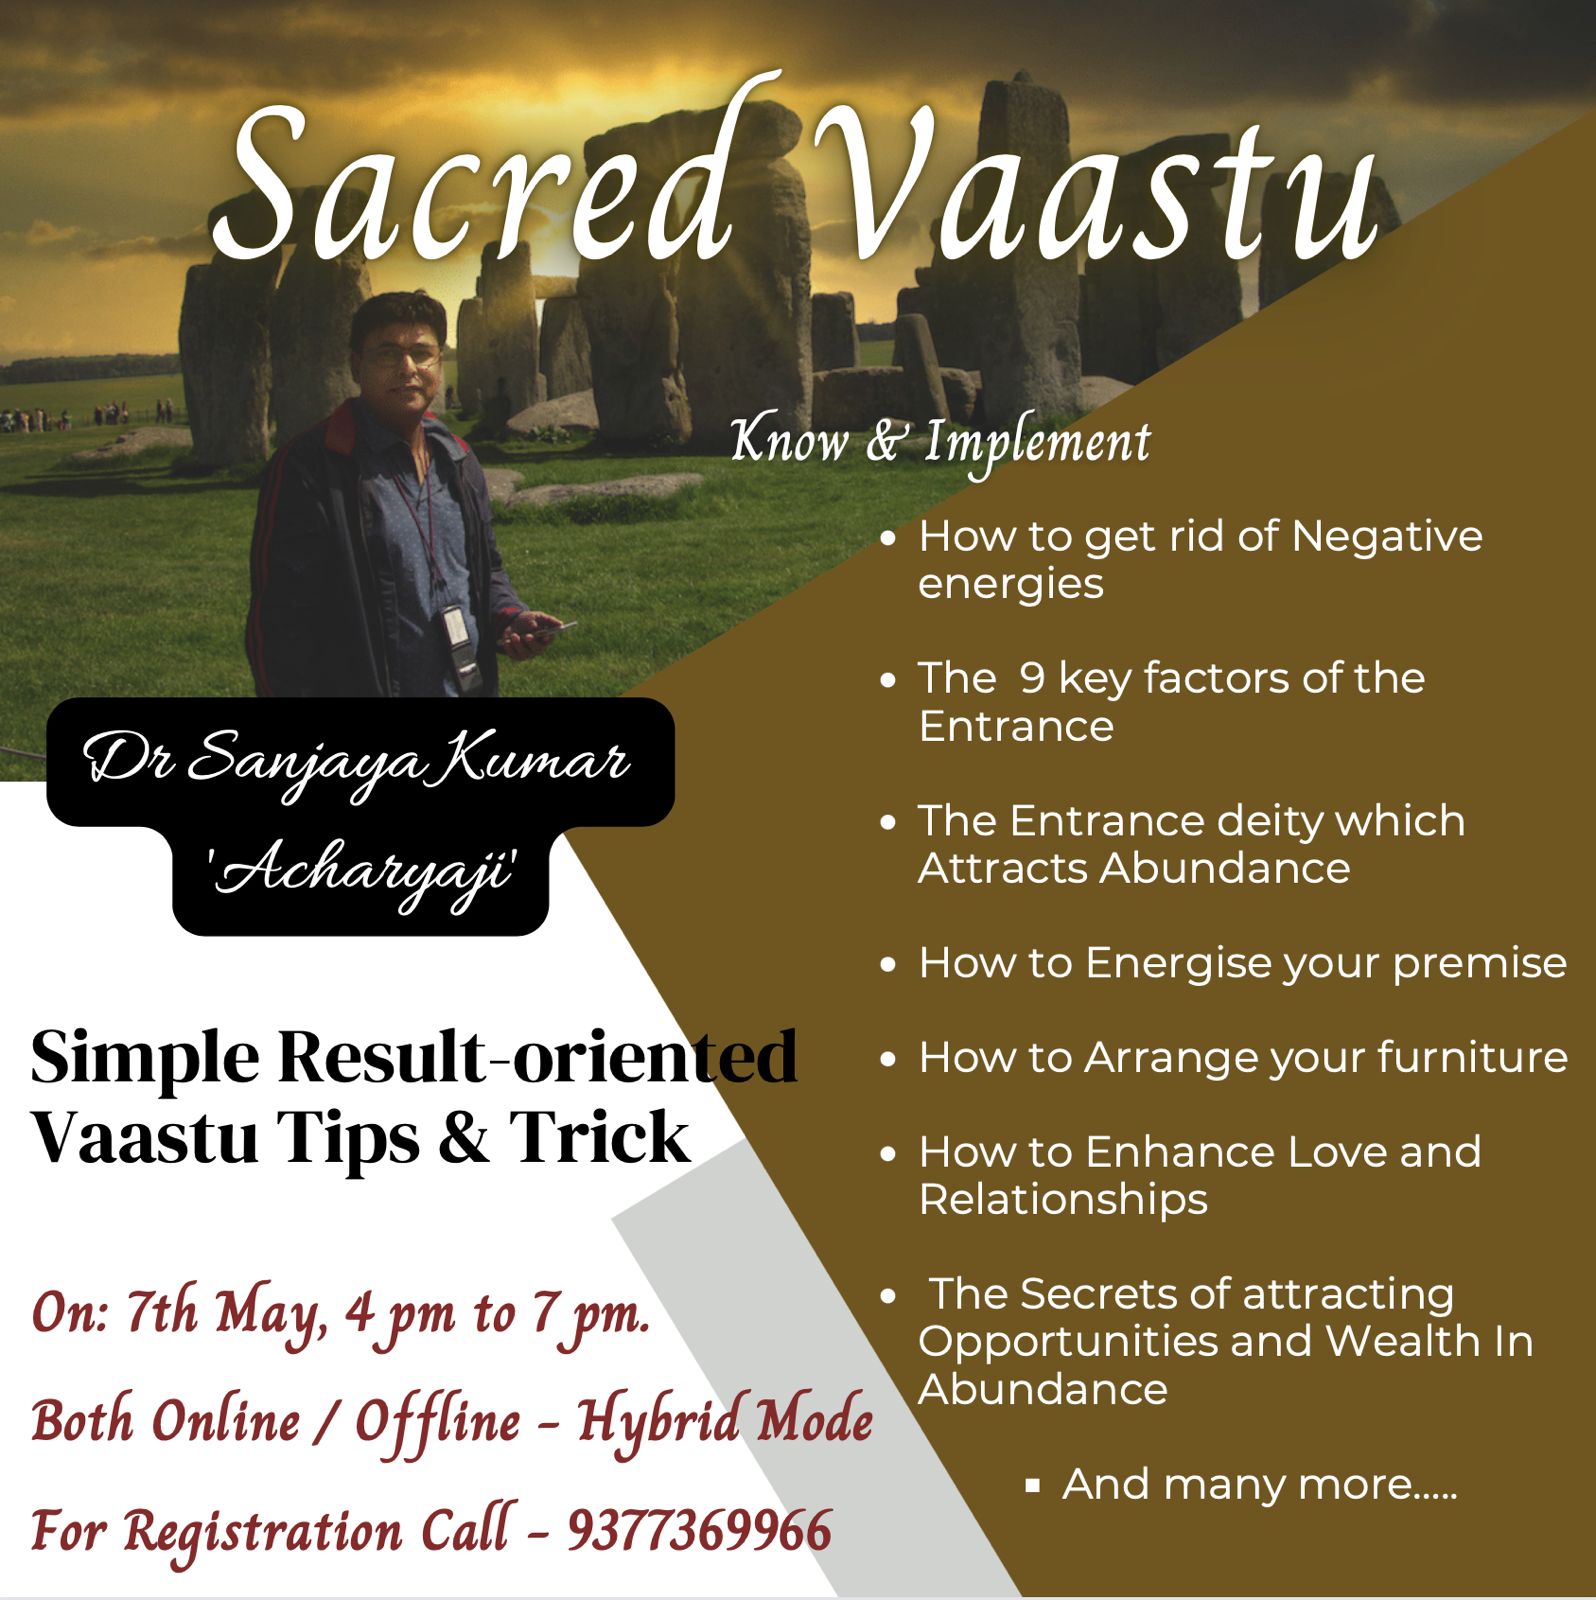 Sacred Vaastu - Practical result-oriented Vaastu Tips & Tricks  By Dr Sanjaya Kumar ‘Acharyaji